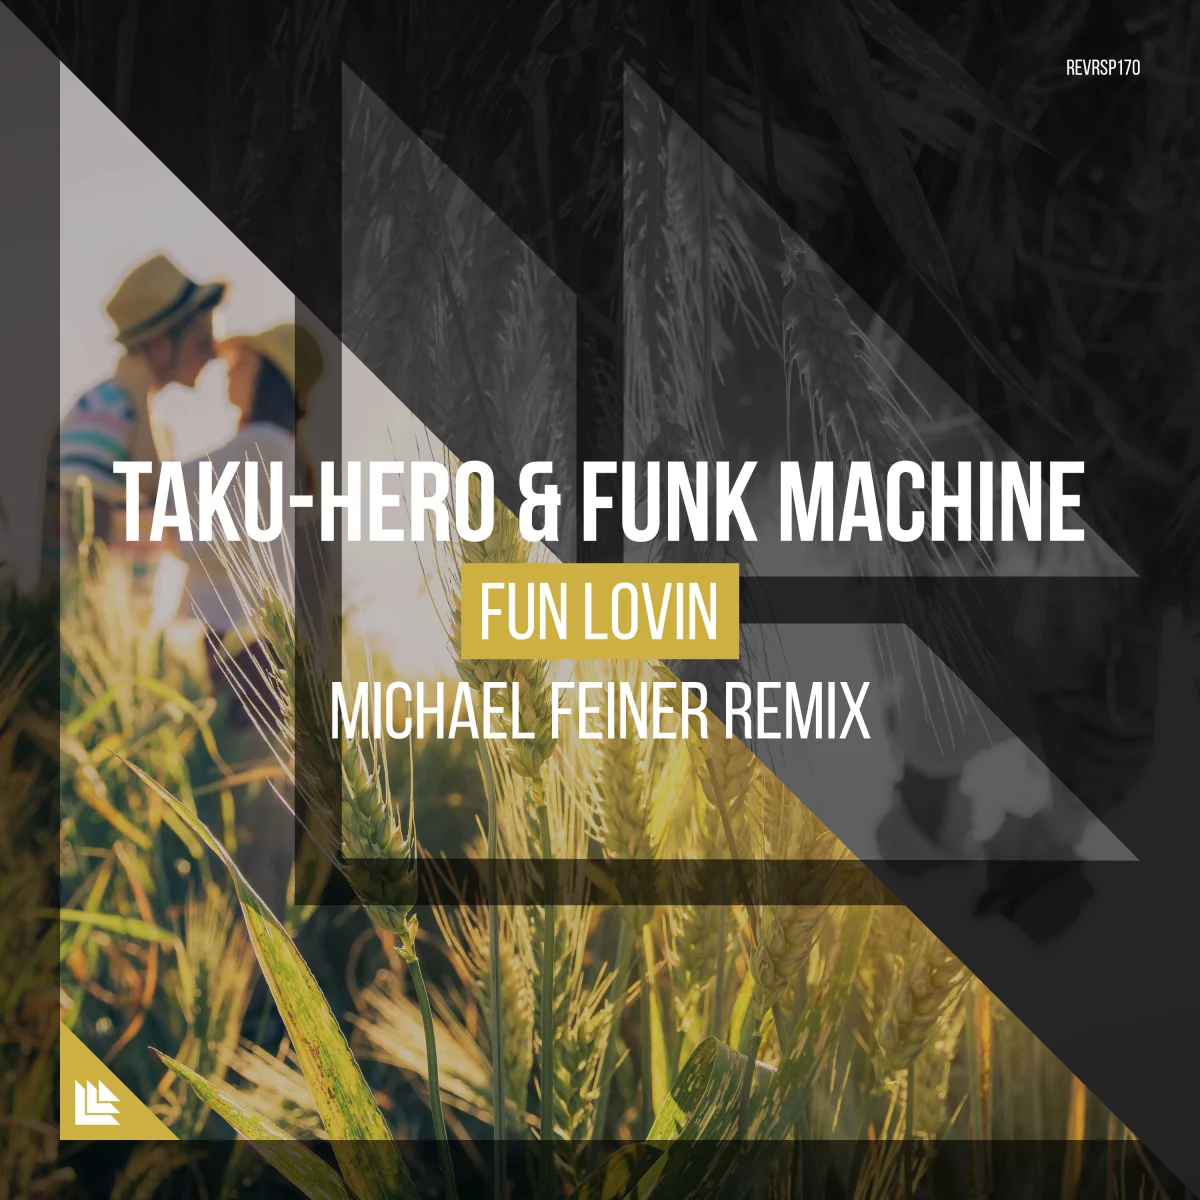 Fun Lovin (Michael Feiner Remix) - Taku-Hero & Funk Machine